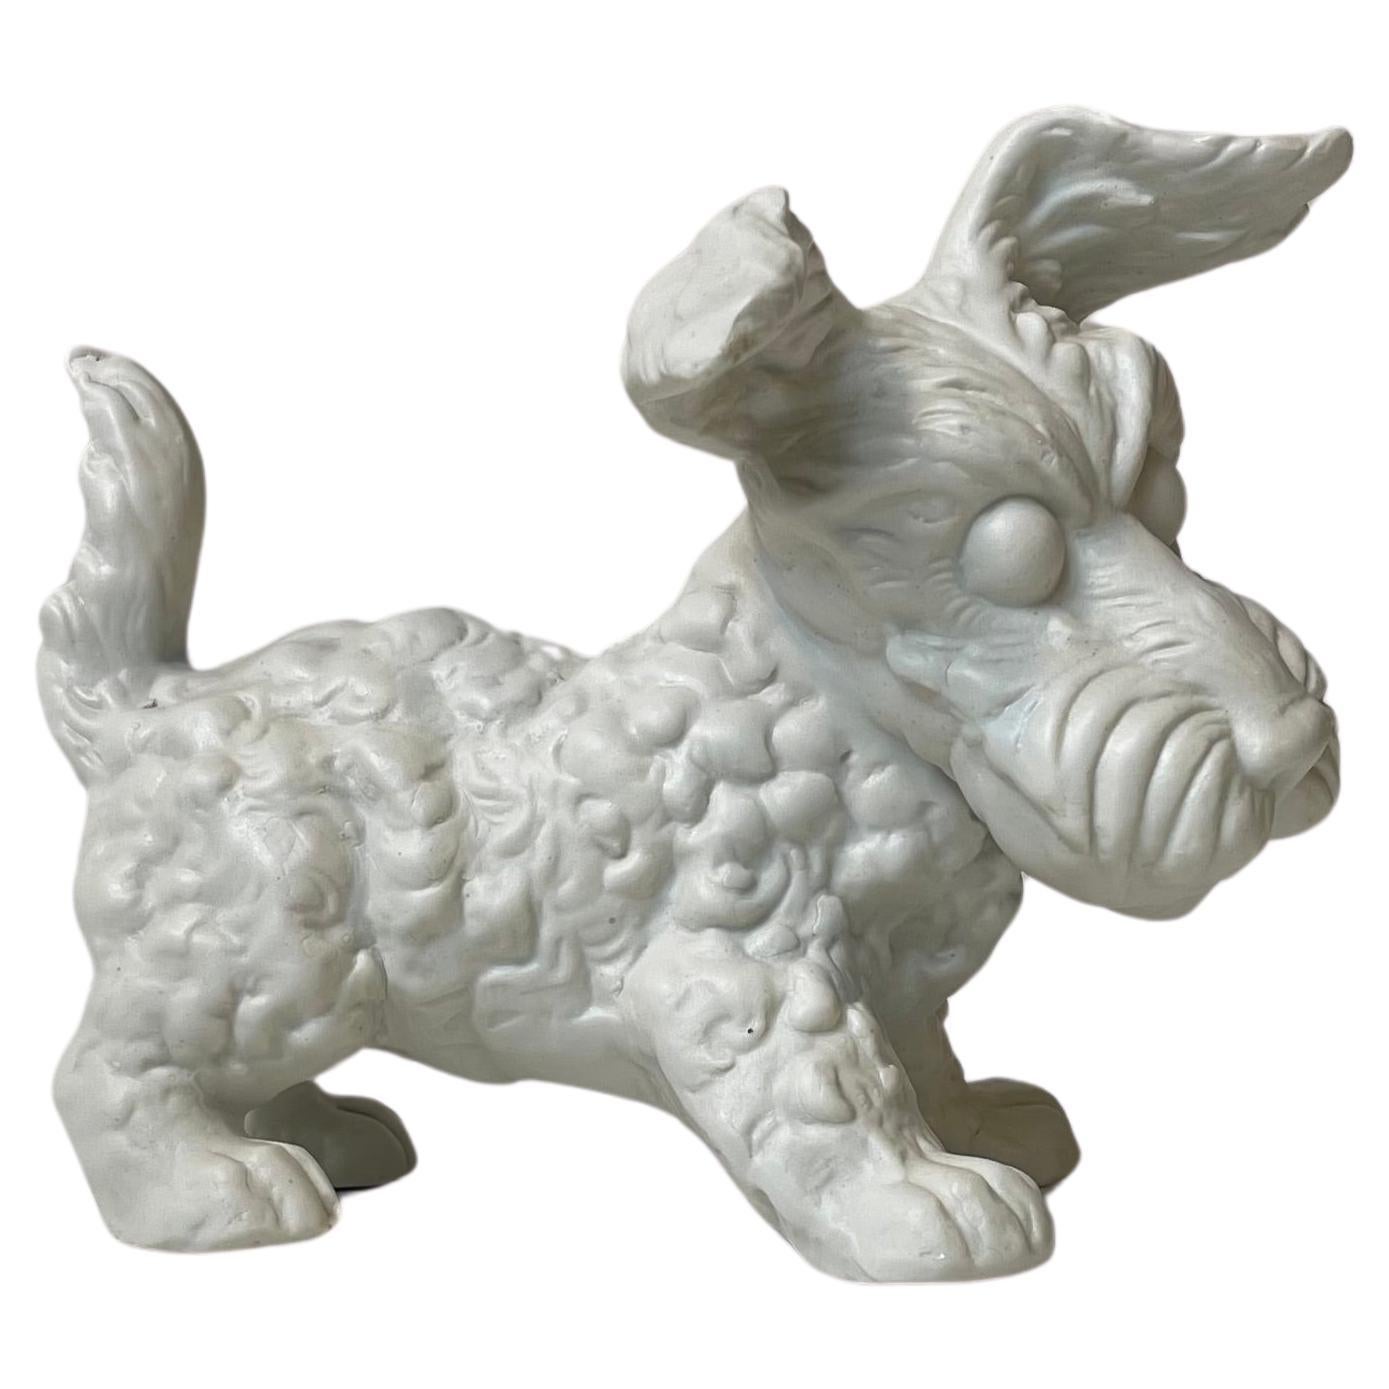 Scottish Terrier White Bisque Porcelain Figurine by Schaubach Kunst, 1950s For Sale